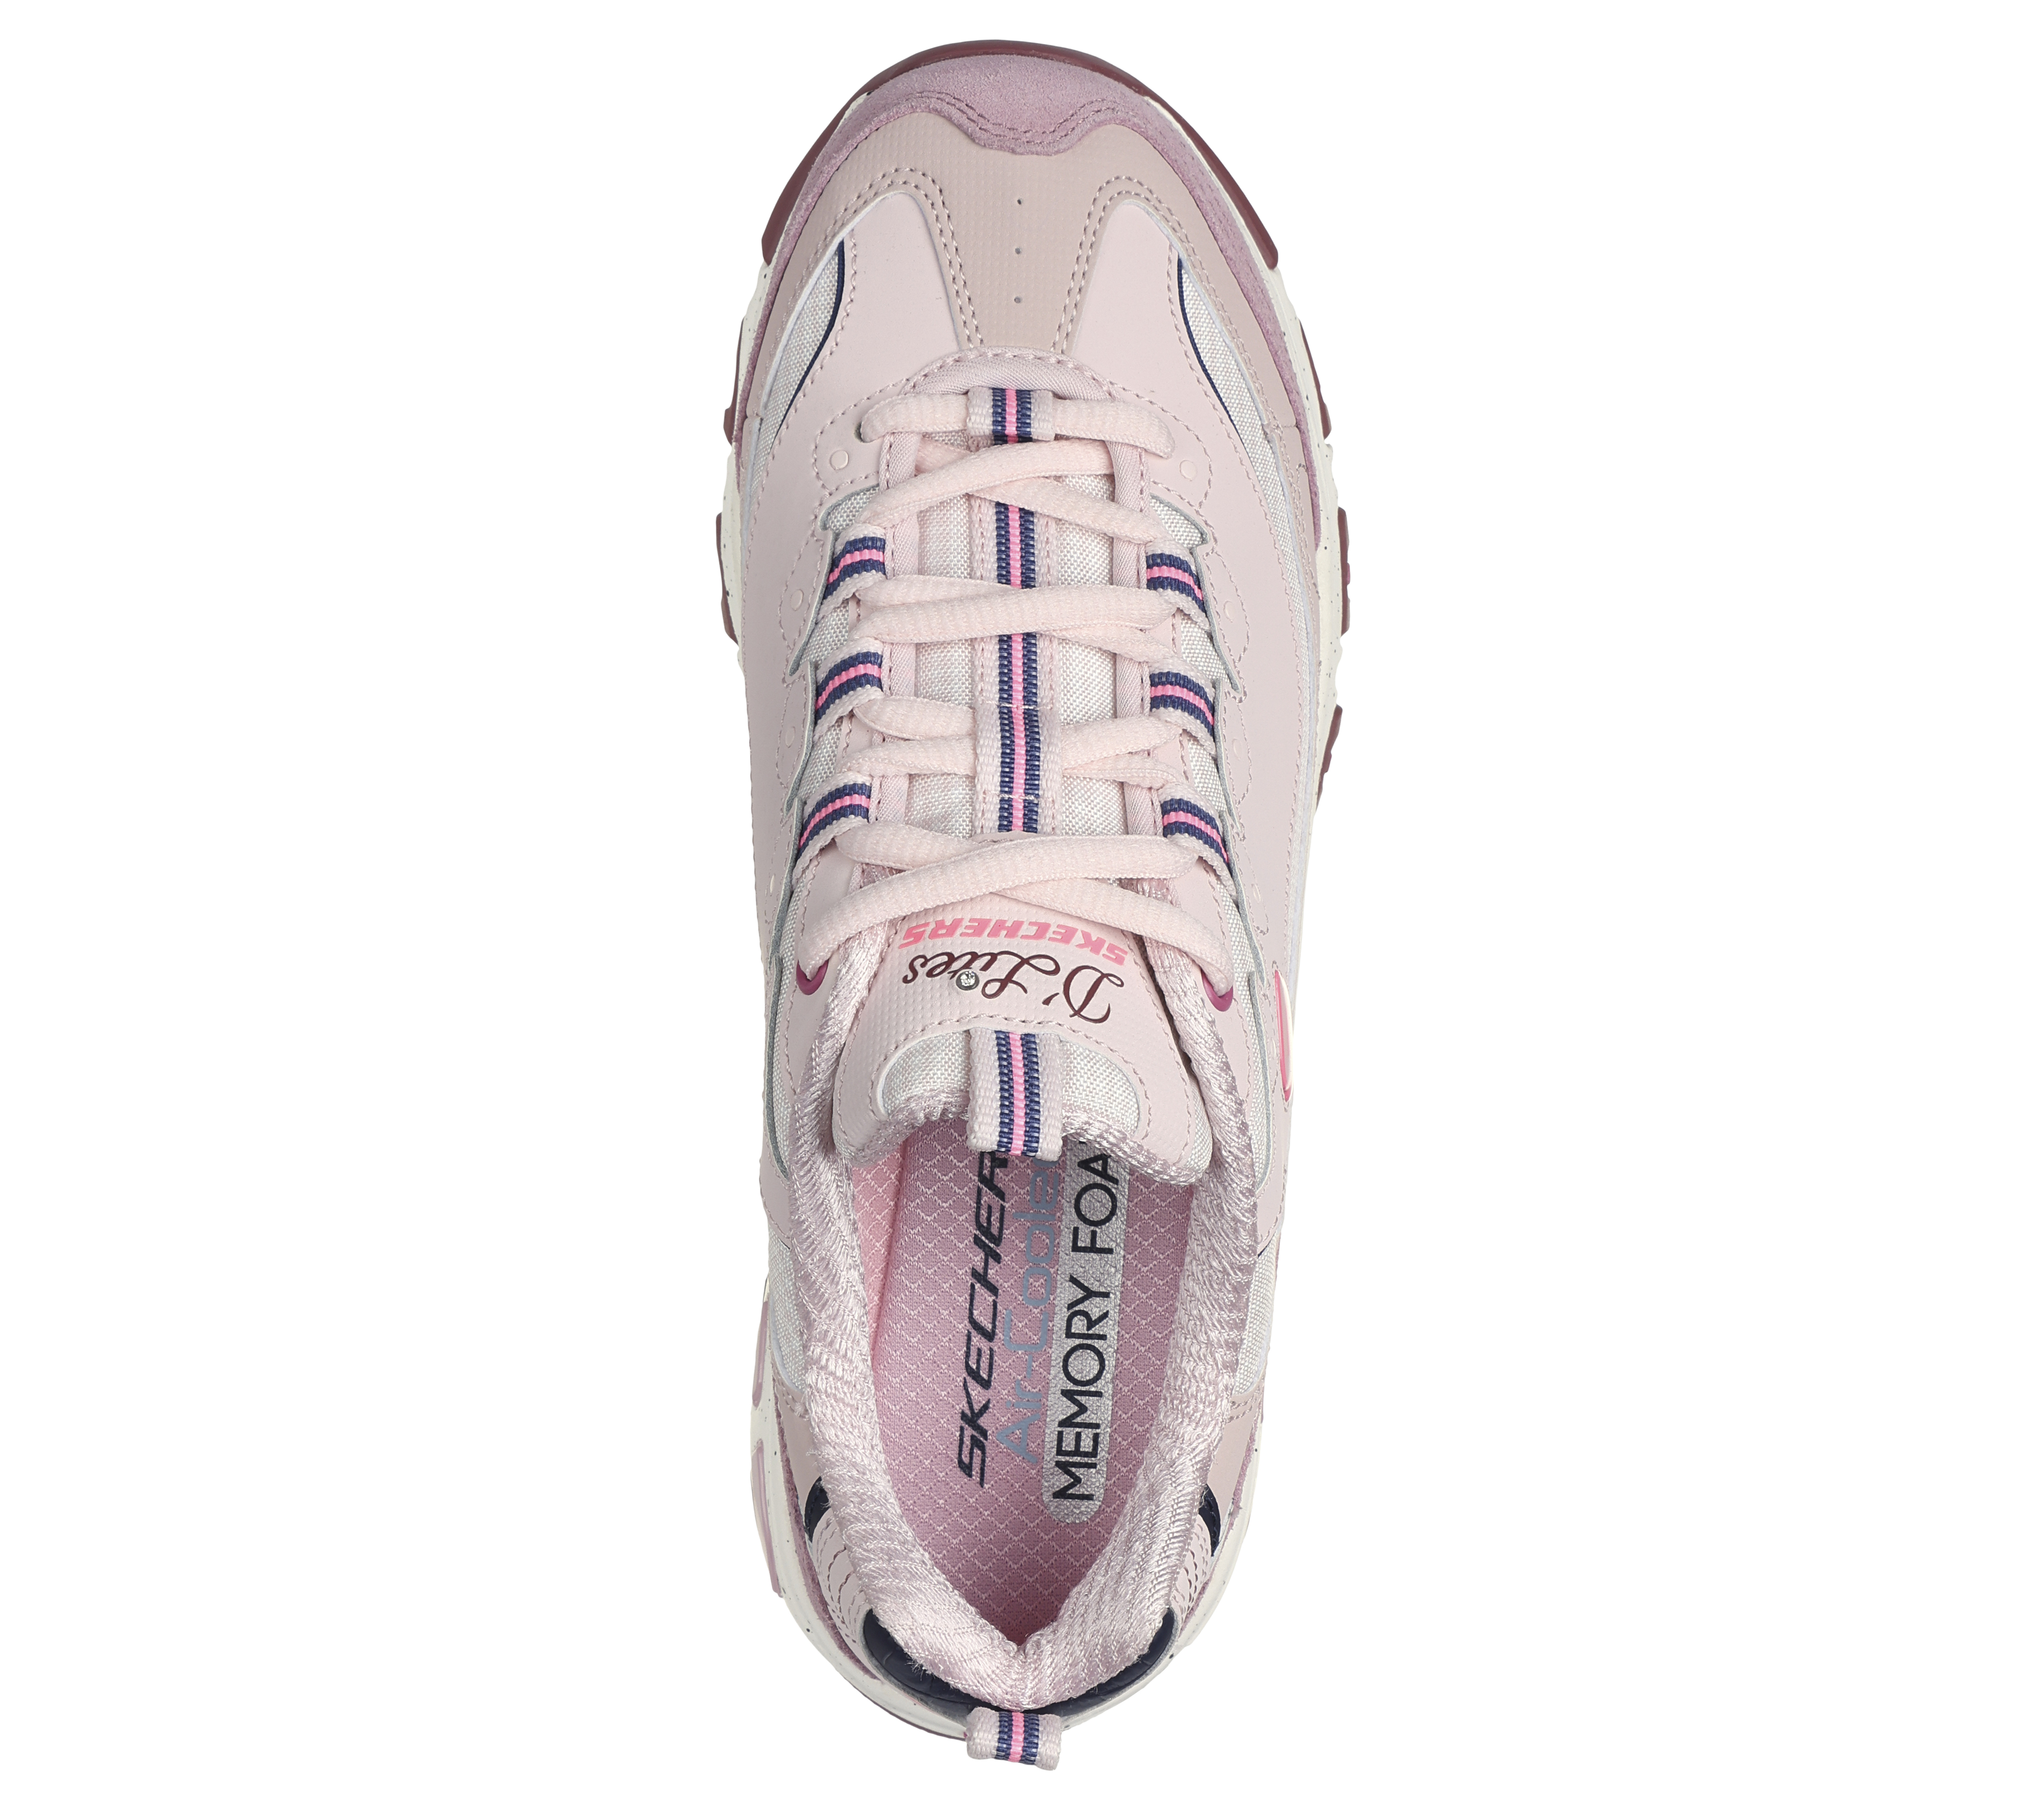 Skechers Sport Women's D'Lites Looking Glass Fashion Sneaker : Skechers:  : Clothing, Shoes & Accessories